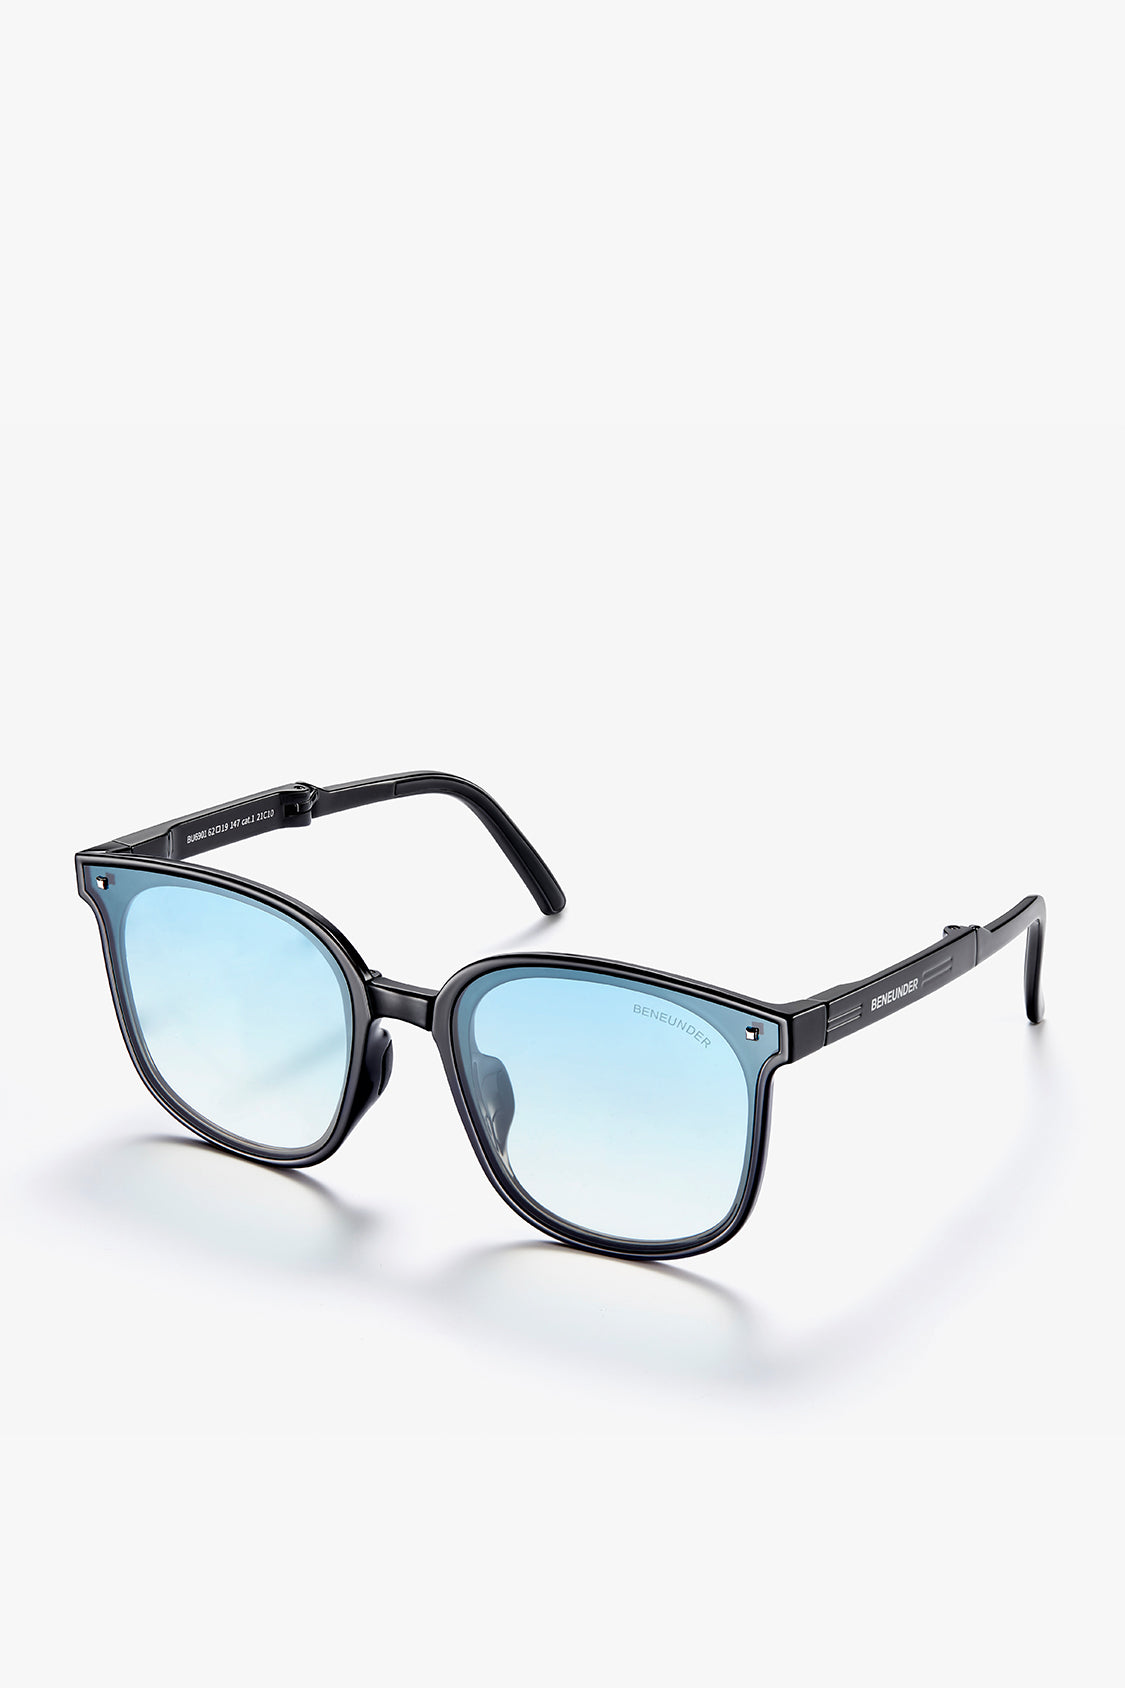 beneunder wild polarized folding sunglasses shades for women men #color_transparent blue